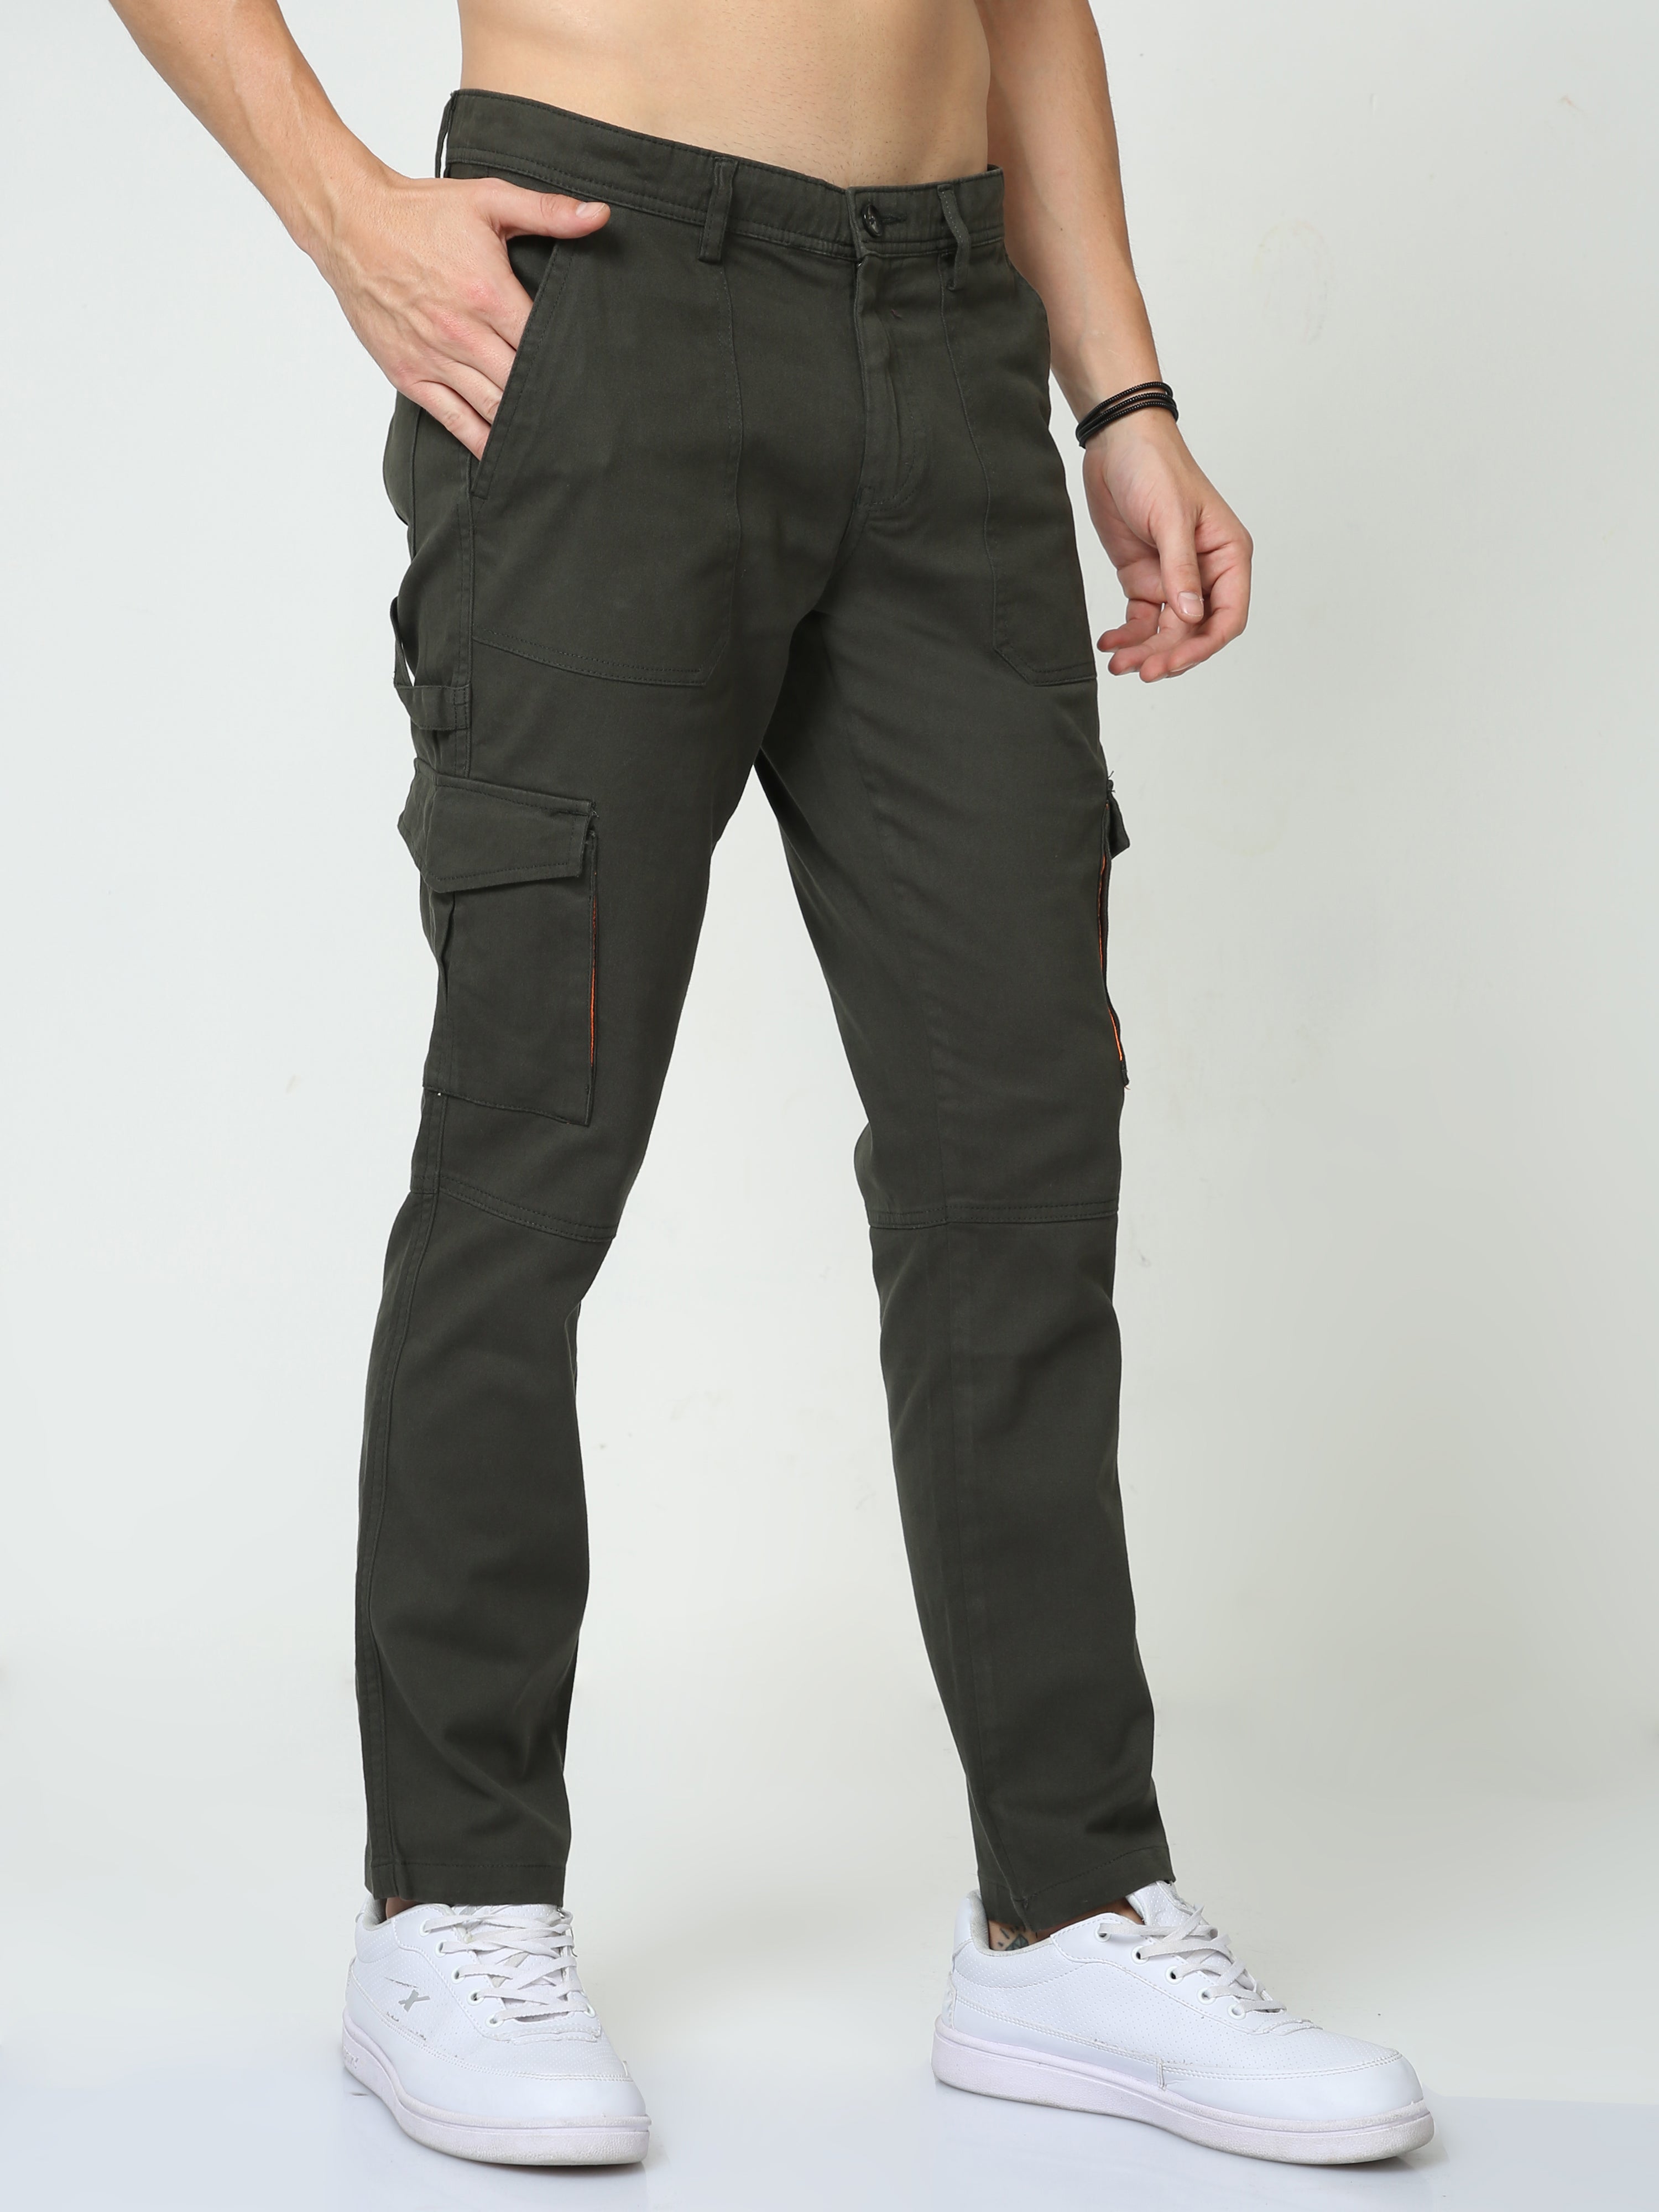 Cestrum Men's Slim Fit Cargo Pants Black and Olive green pack of 2